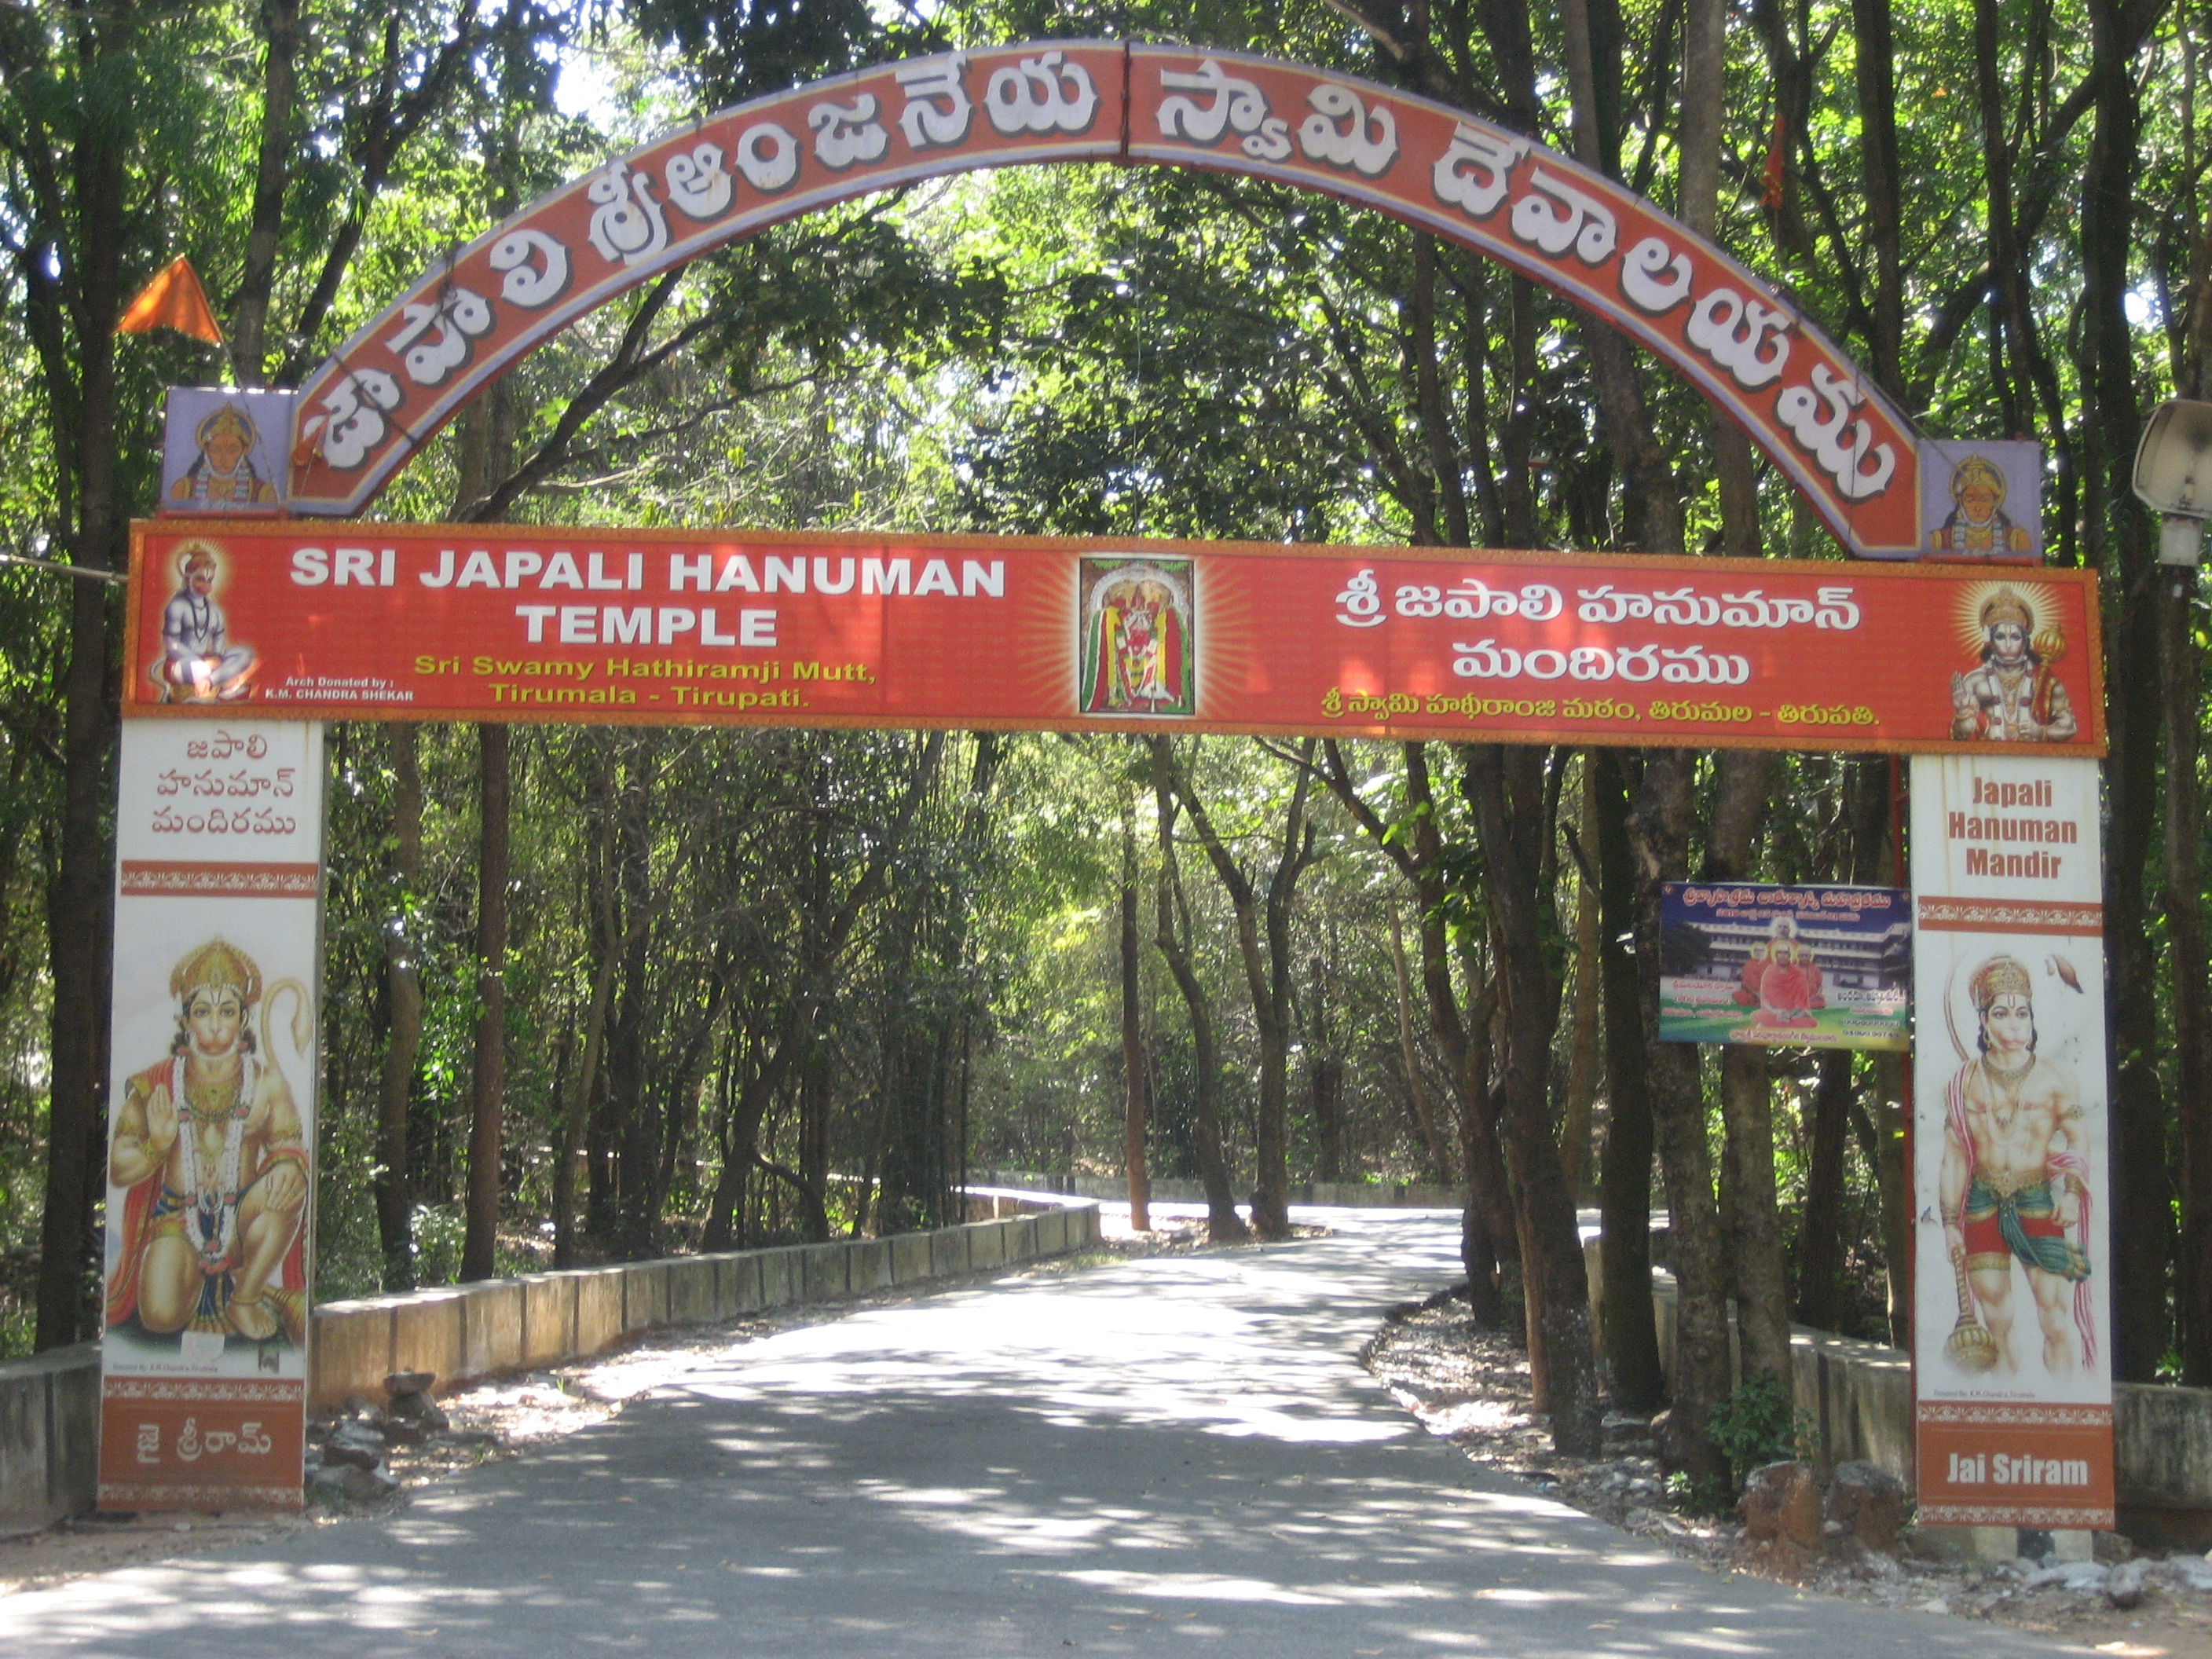 Sri Japali Hanuman Temple